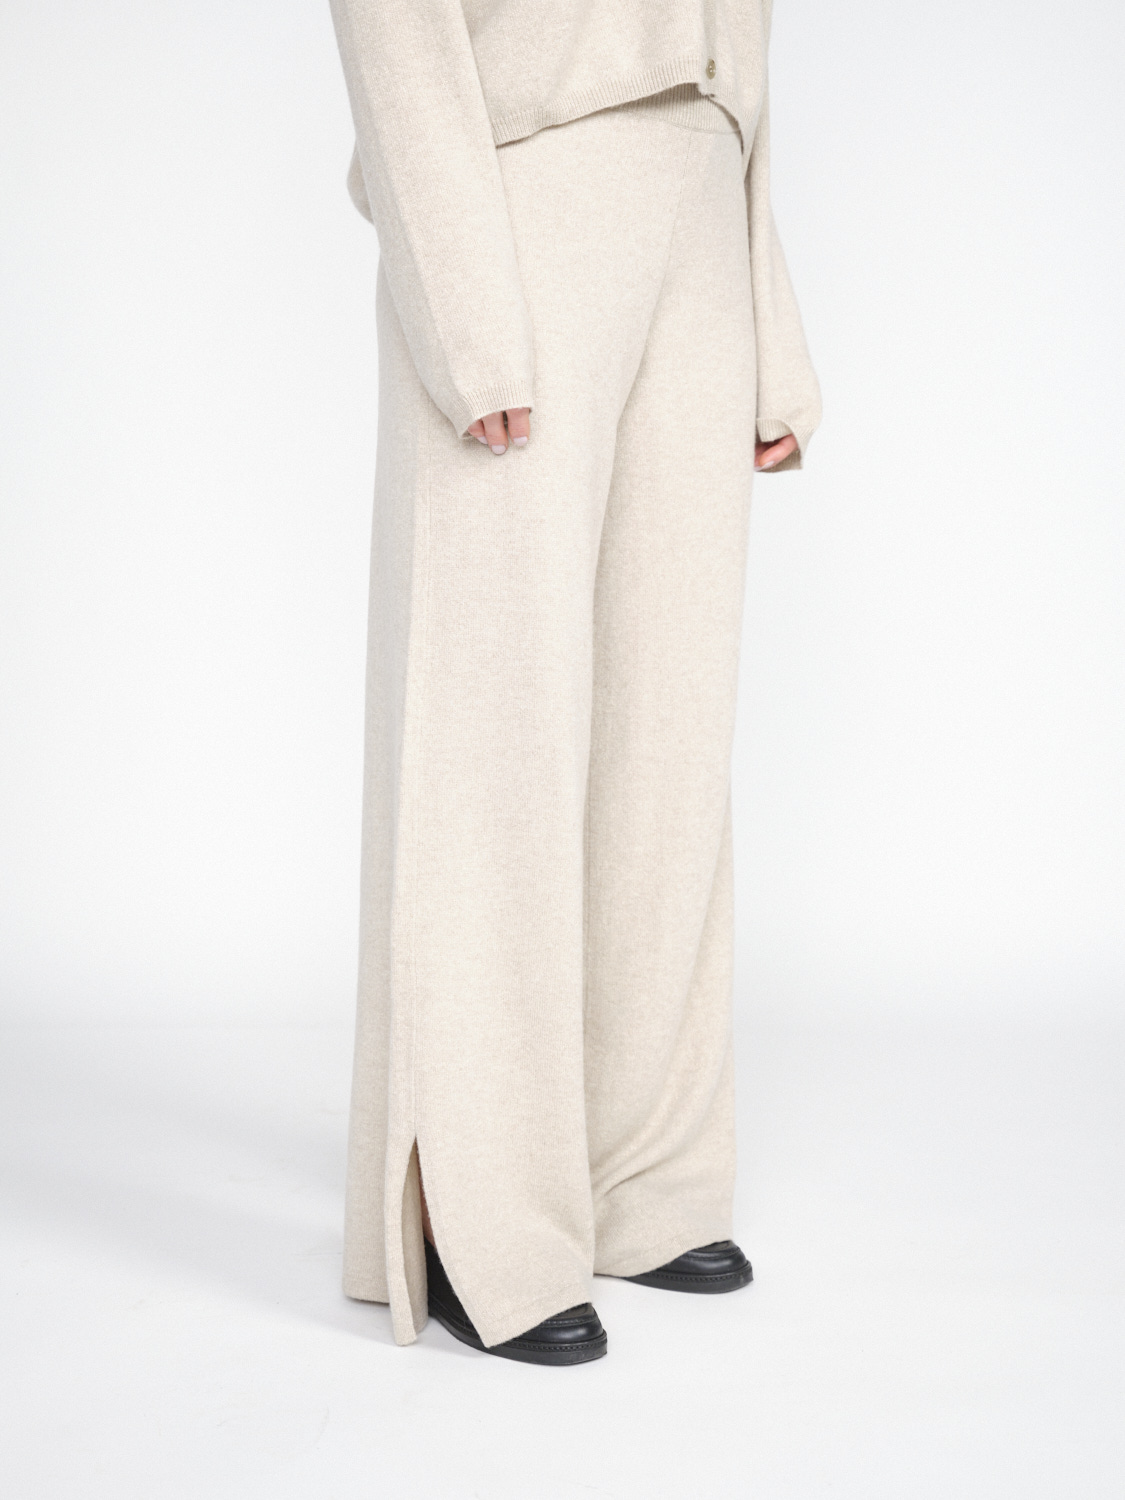 Lisa Yang Marlo - Pantalon en cachemire avec effets scintillants beige S/M